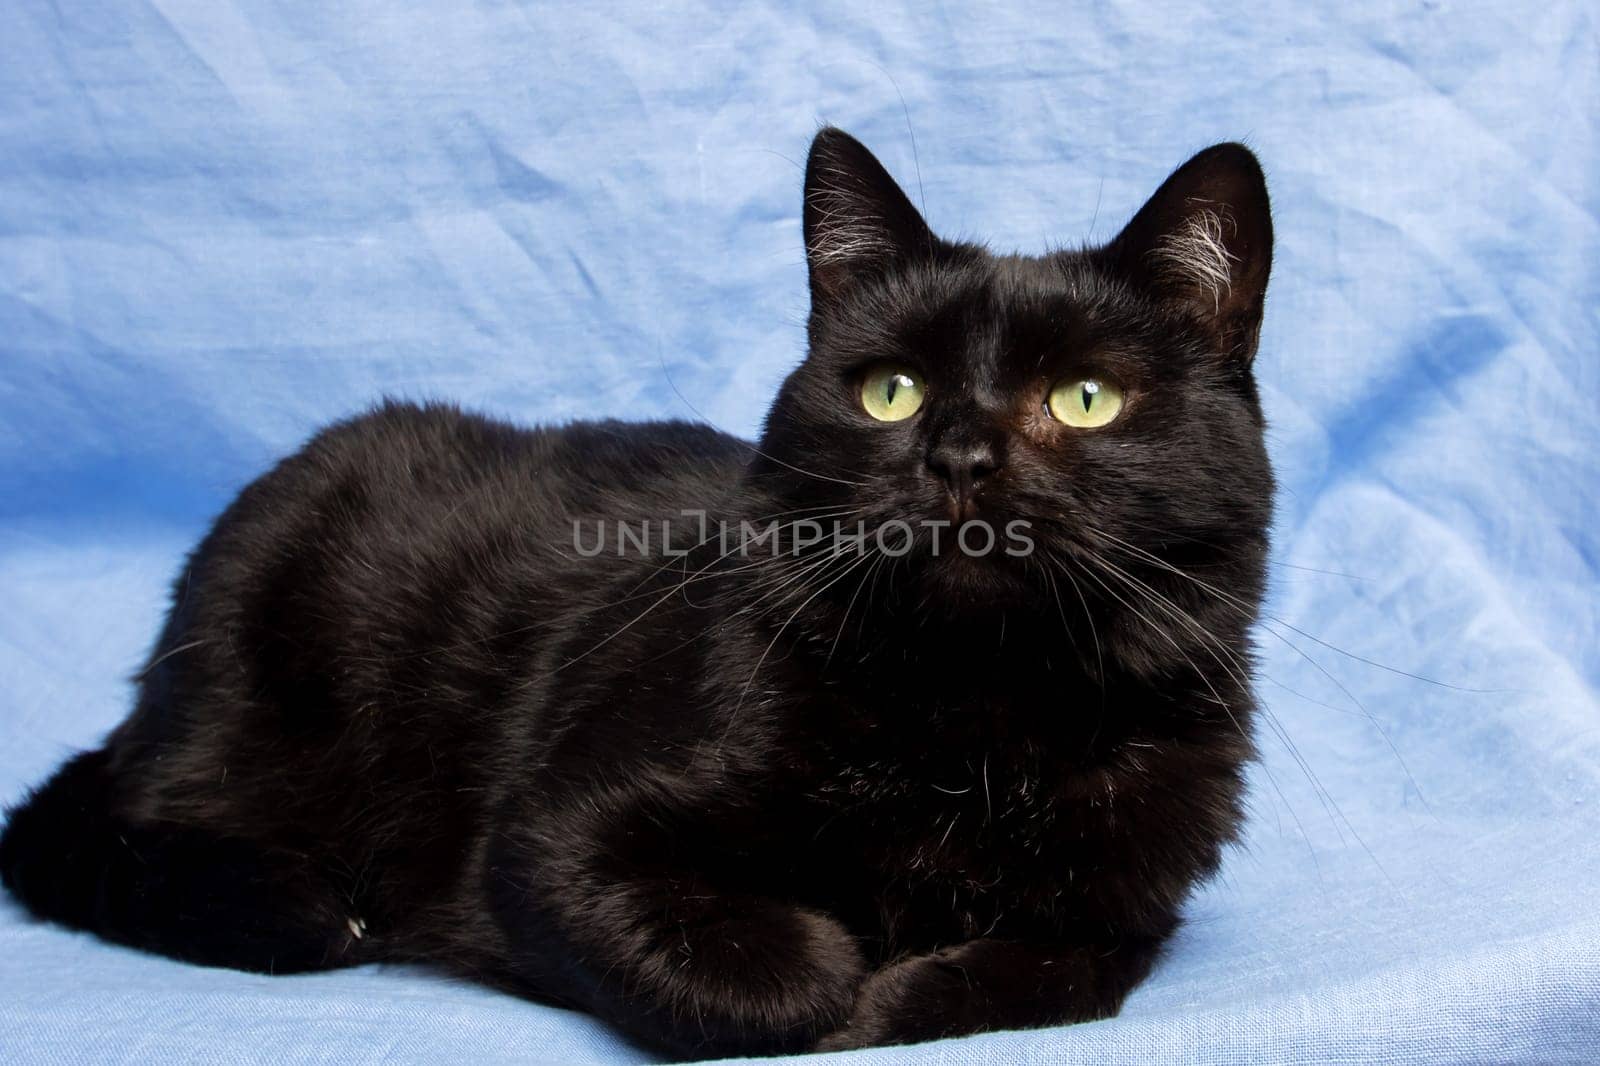 Cute black cat on blue background, close up portrait